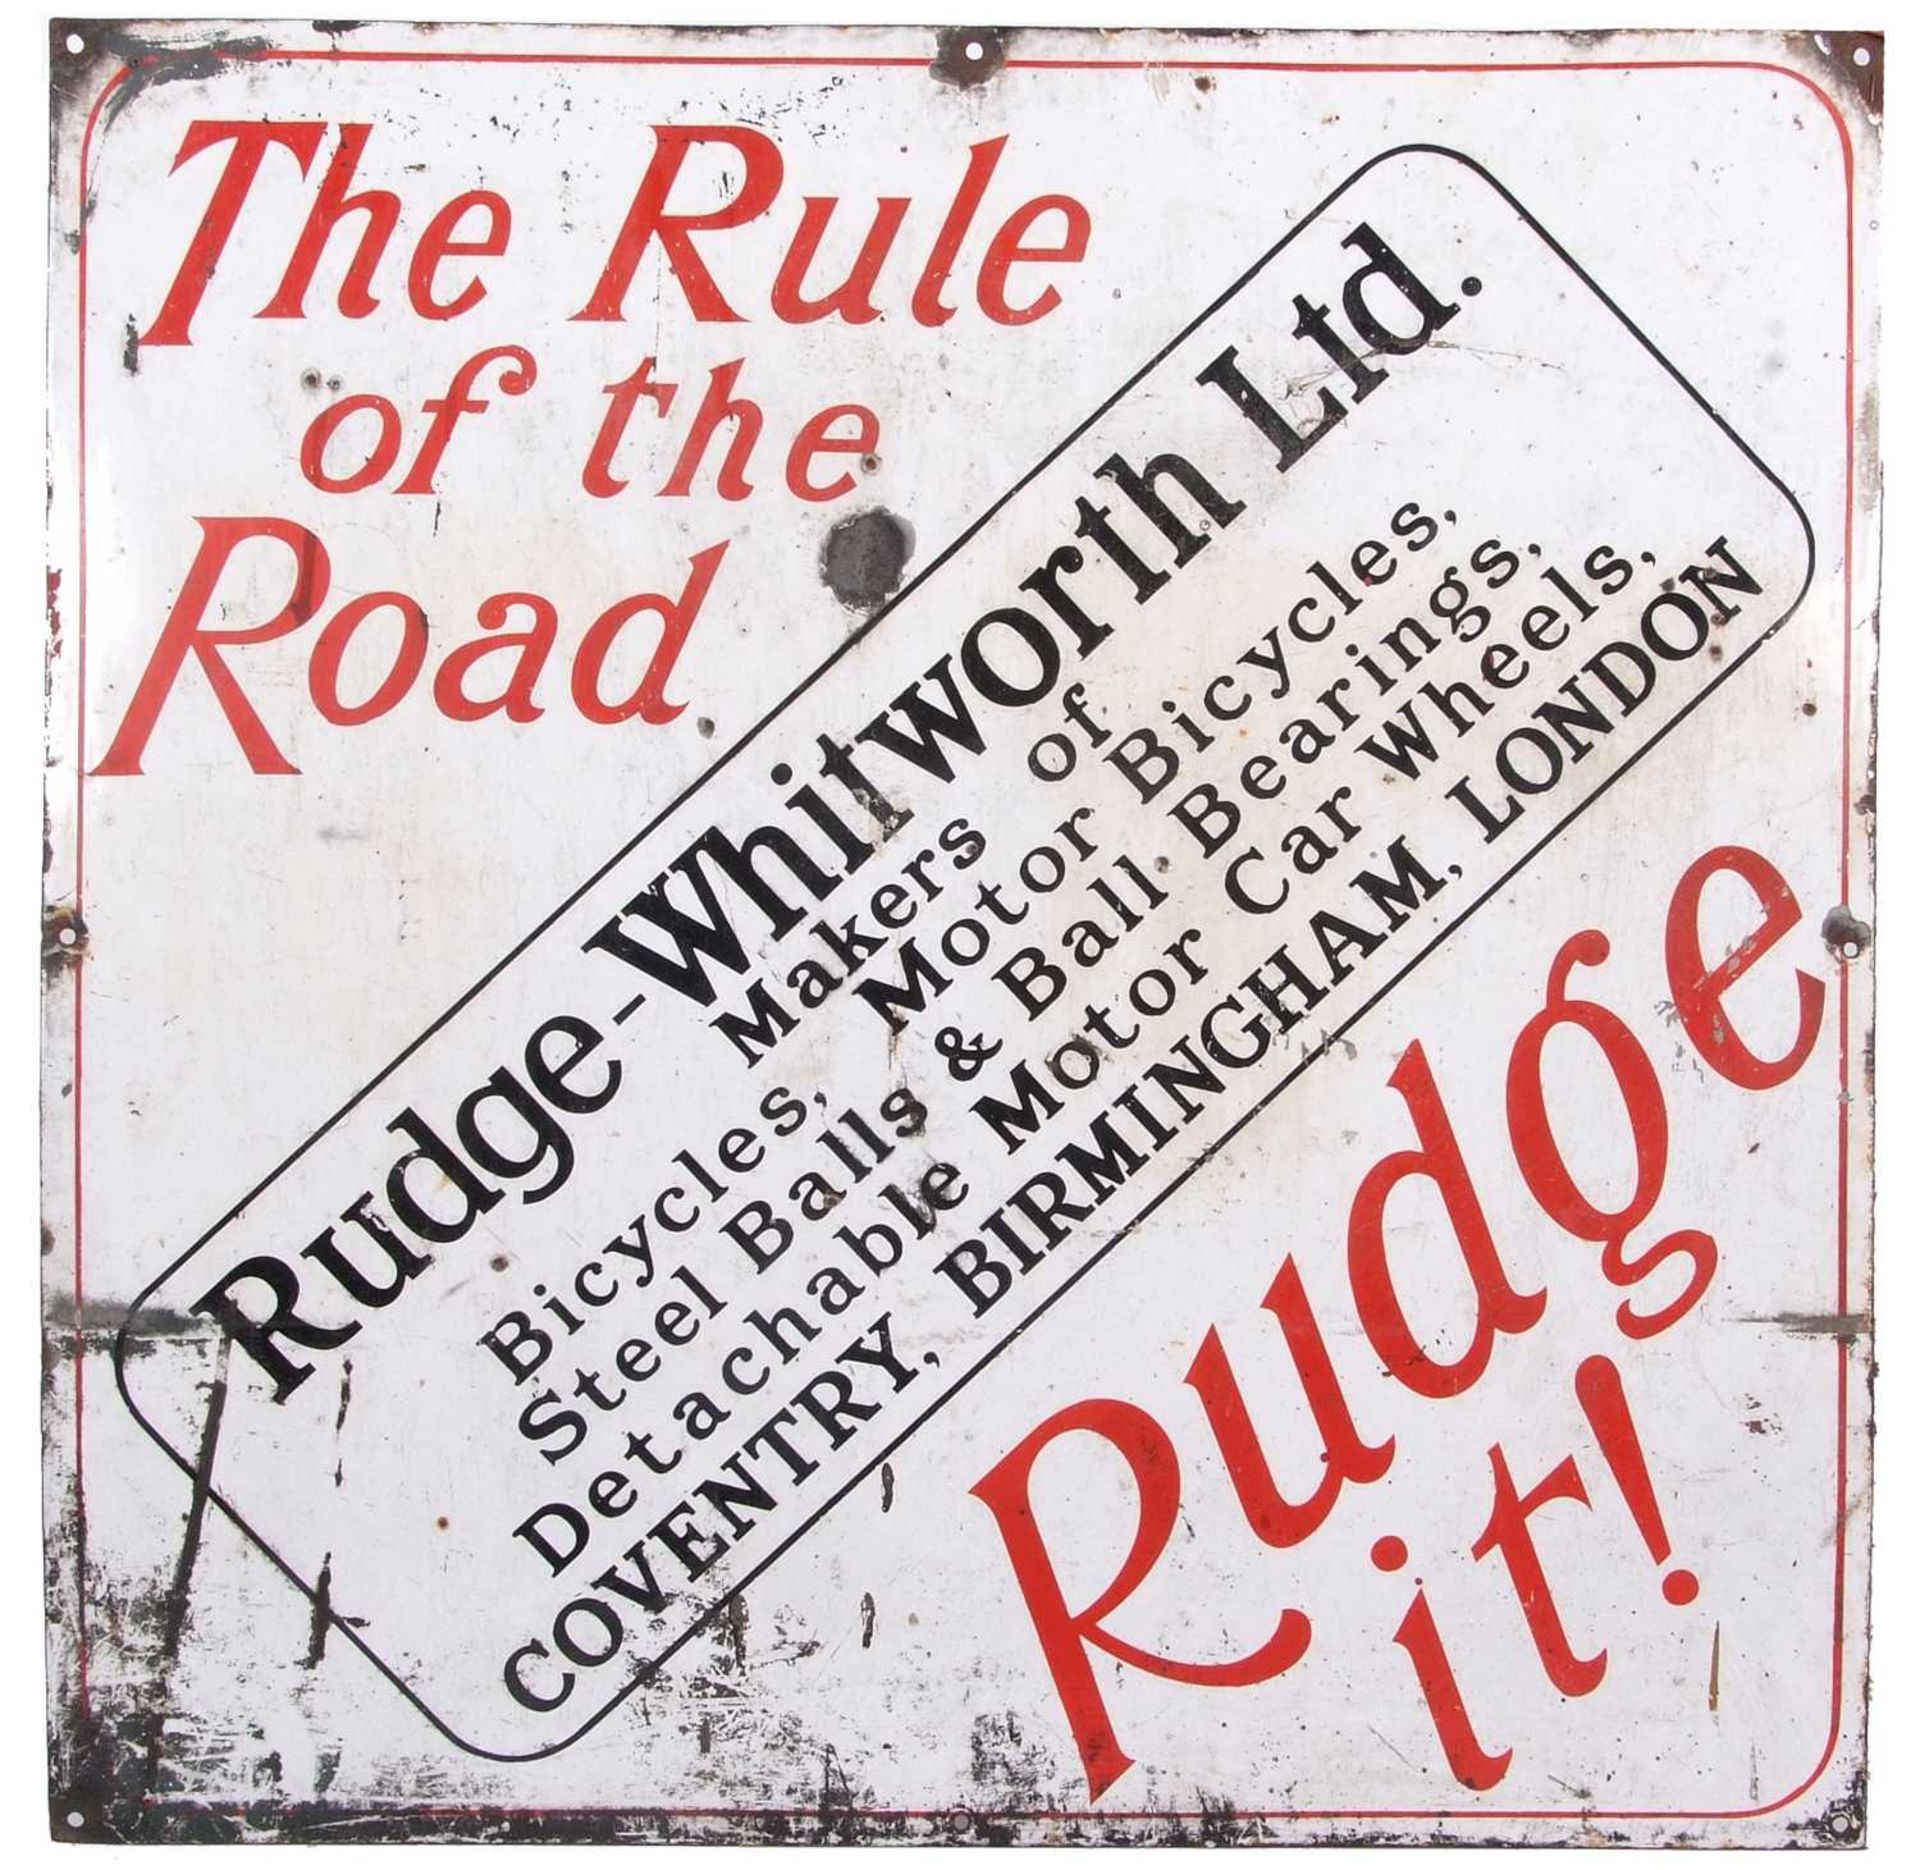 Rudge-Whitworth Ltd enamel sign